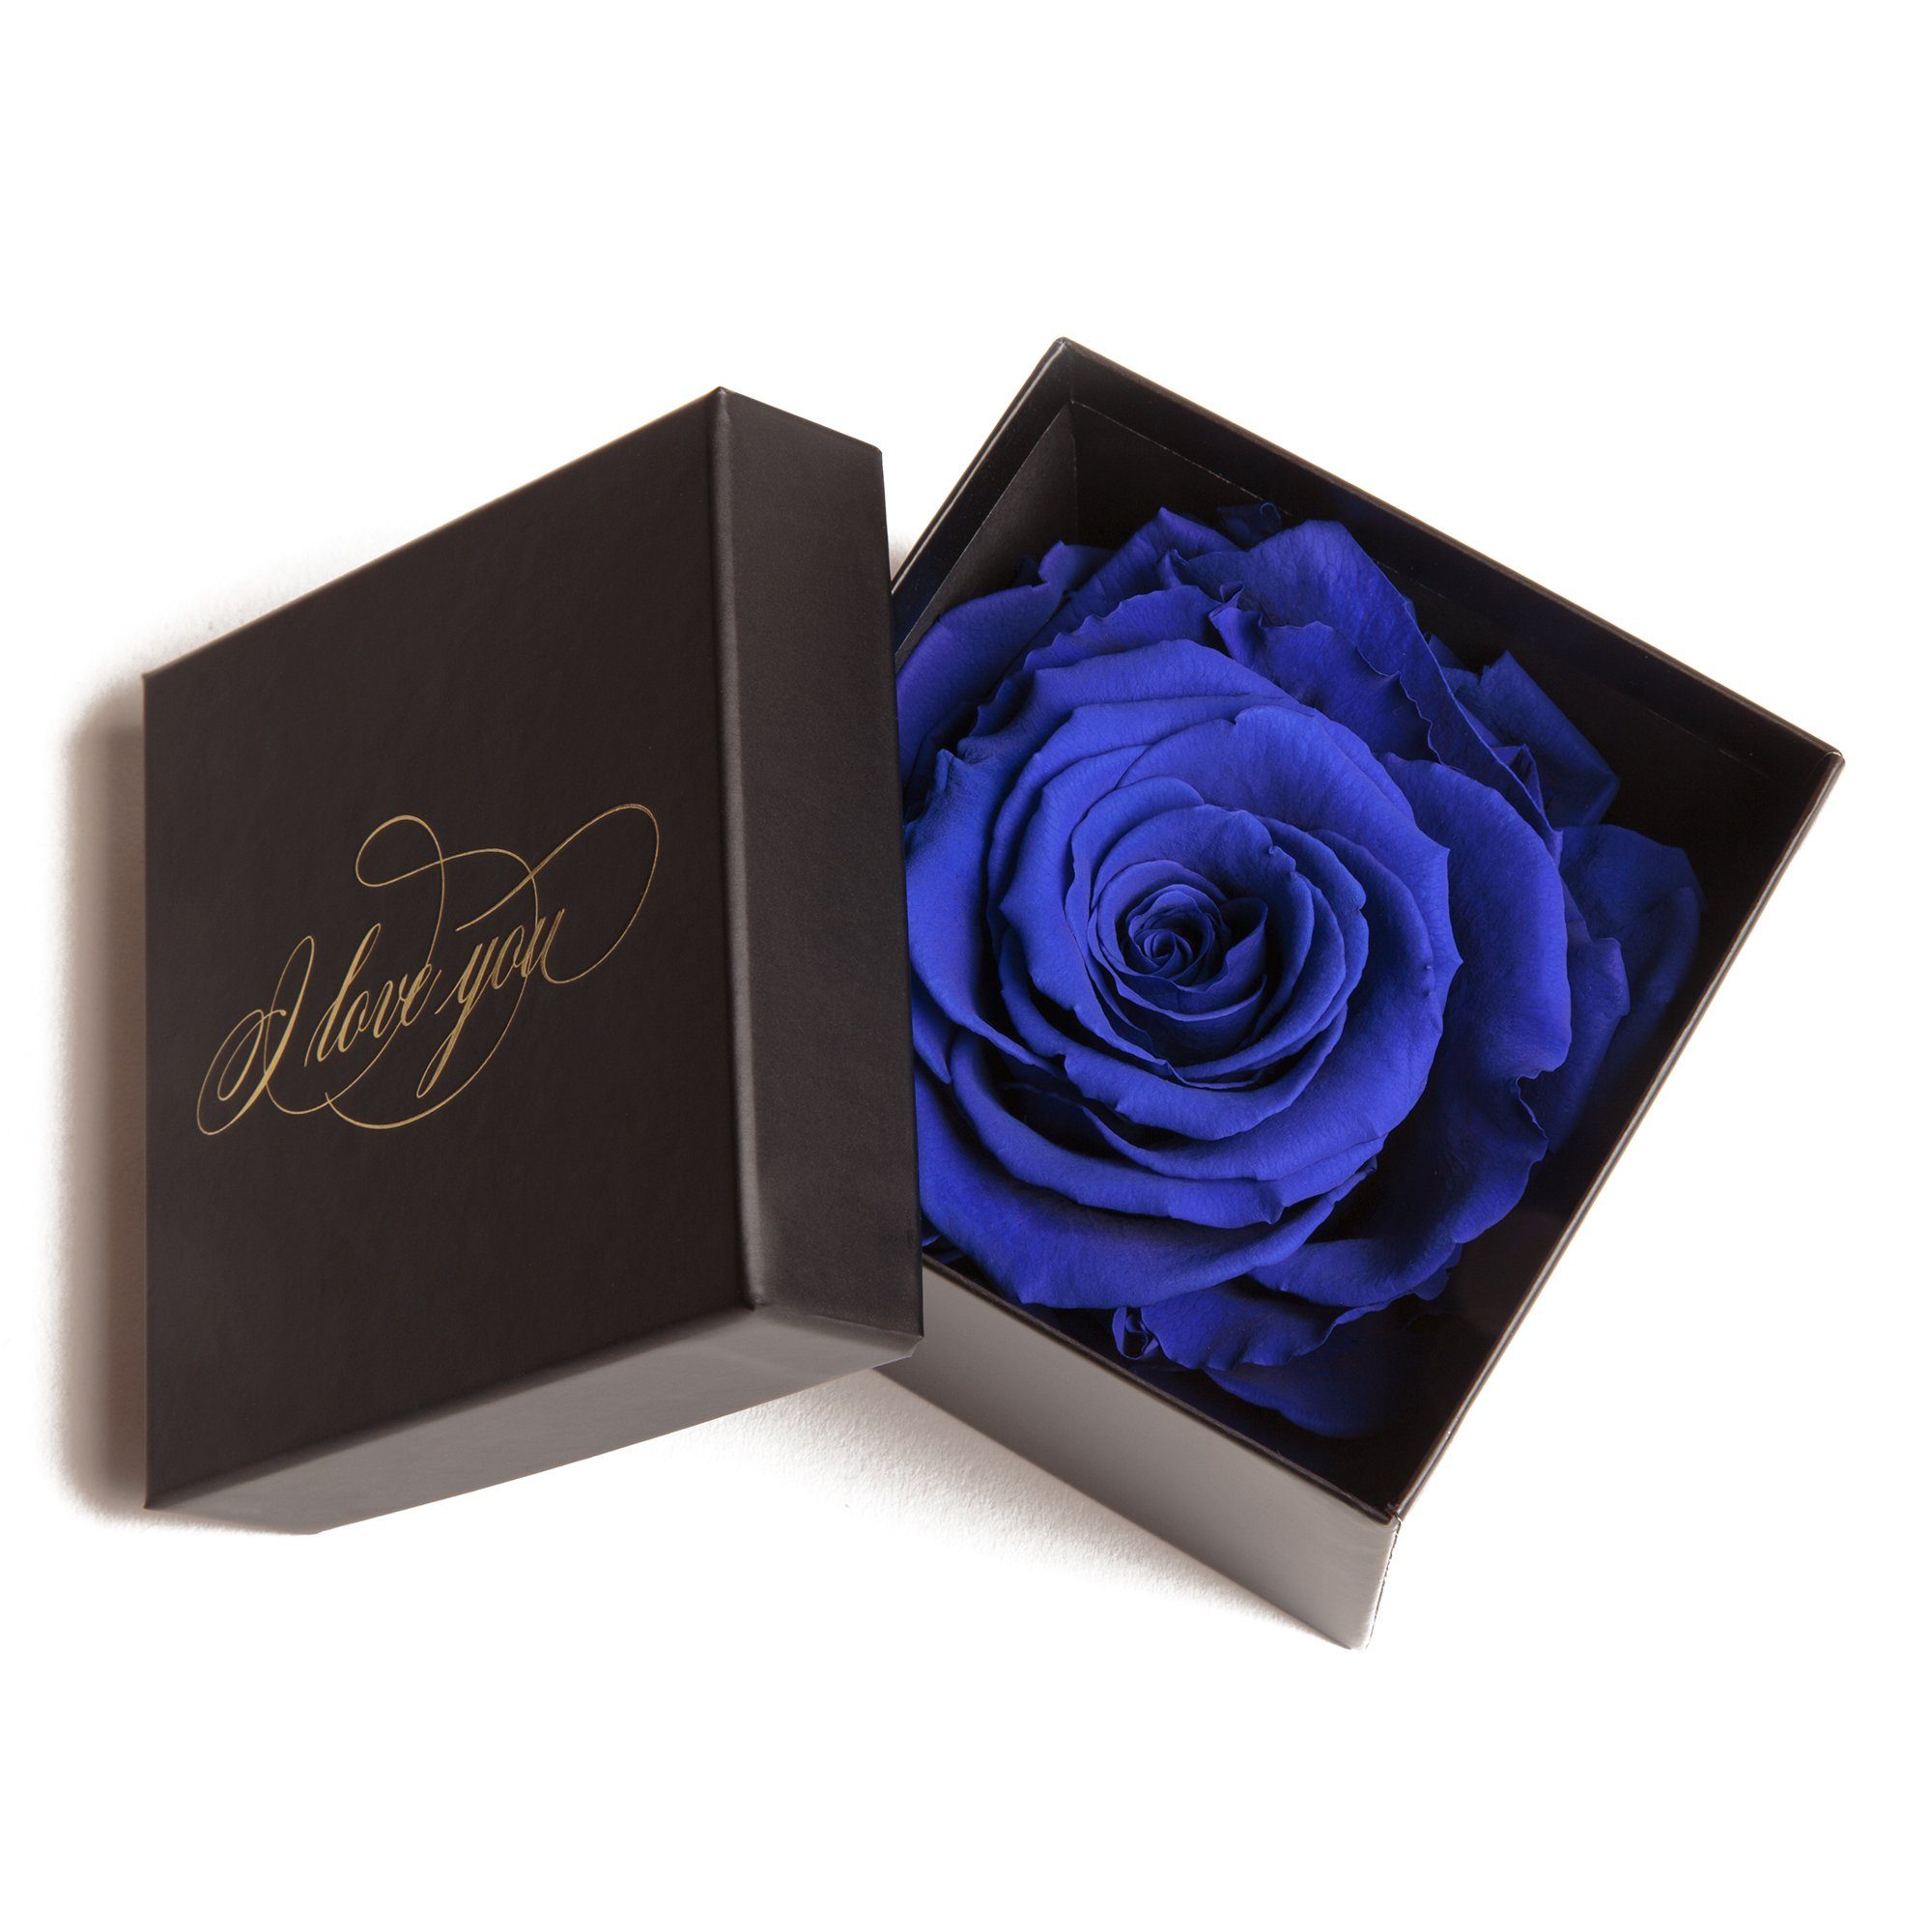 Kunstblume Infinity Rose Box I Love You Geschenk Idee Liebesbeweis Rose, ROSEMARIE SCHULZ Heidelberg, Höhe 6 cm, Echte Rose konserviert Blau